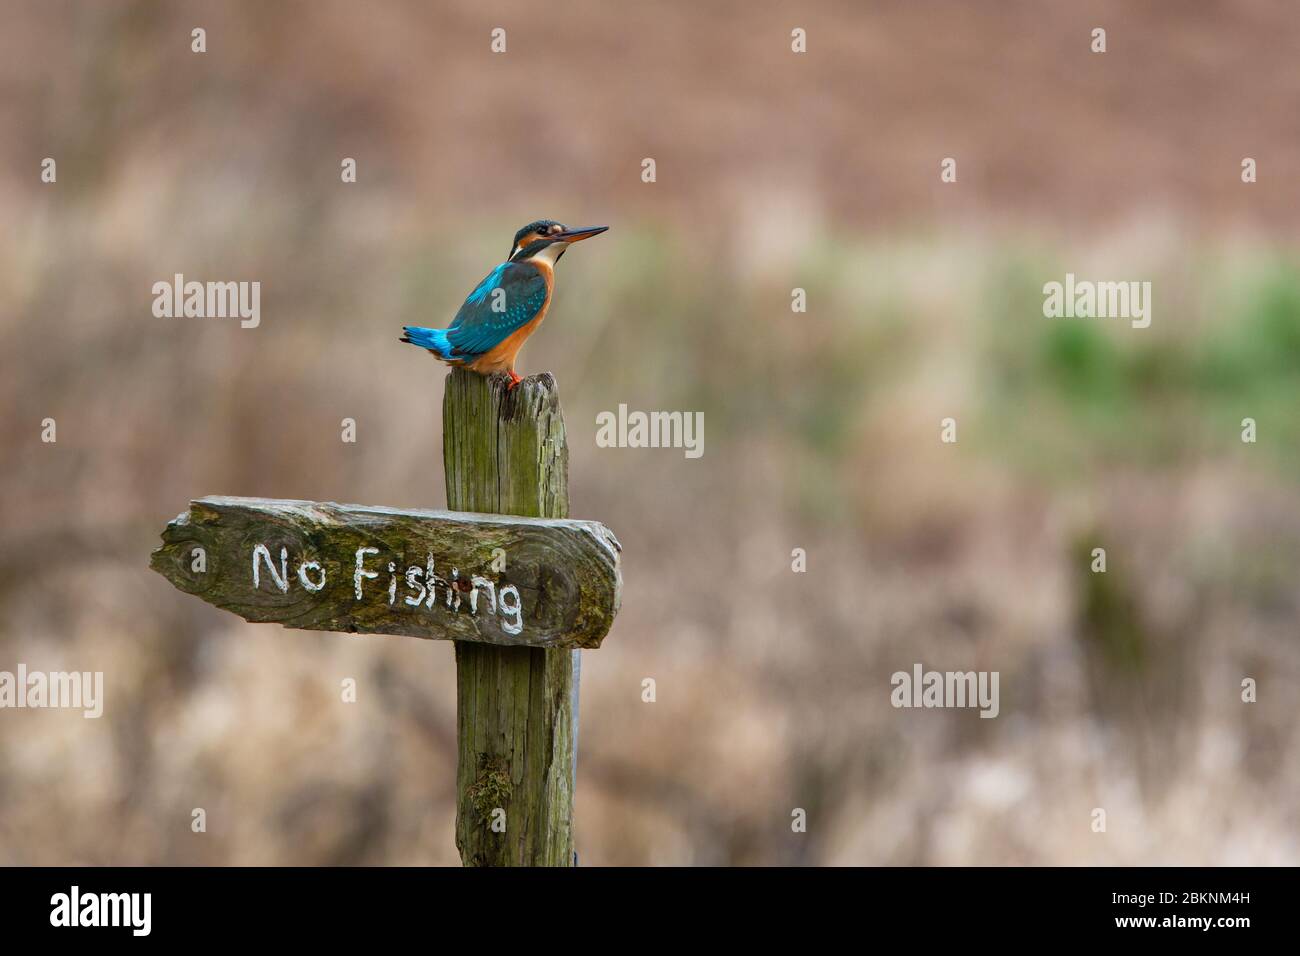 kingfisher, hembra [ Alcedo atthis ] sin señal de pesca Foto de stock